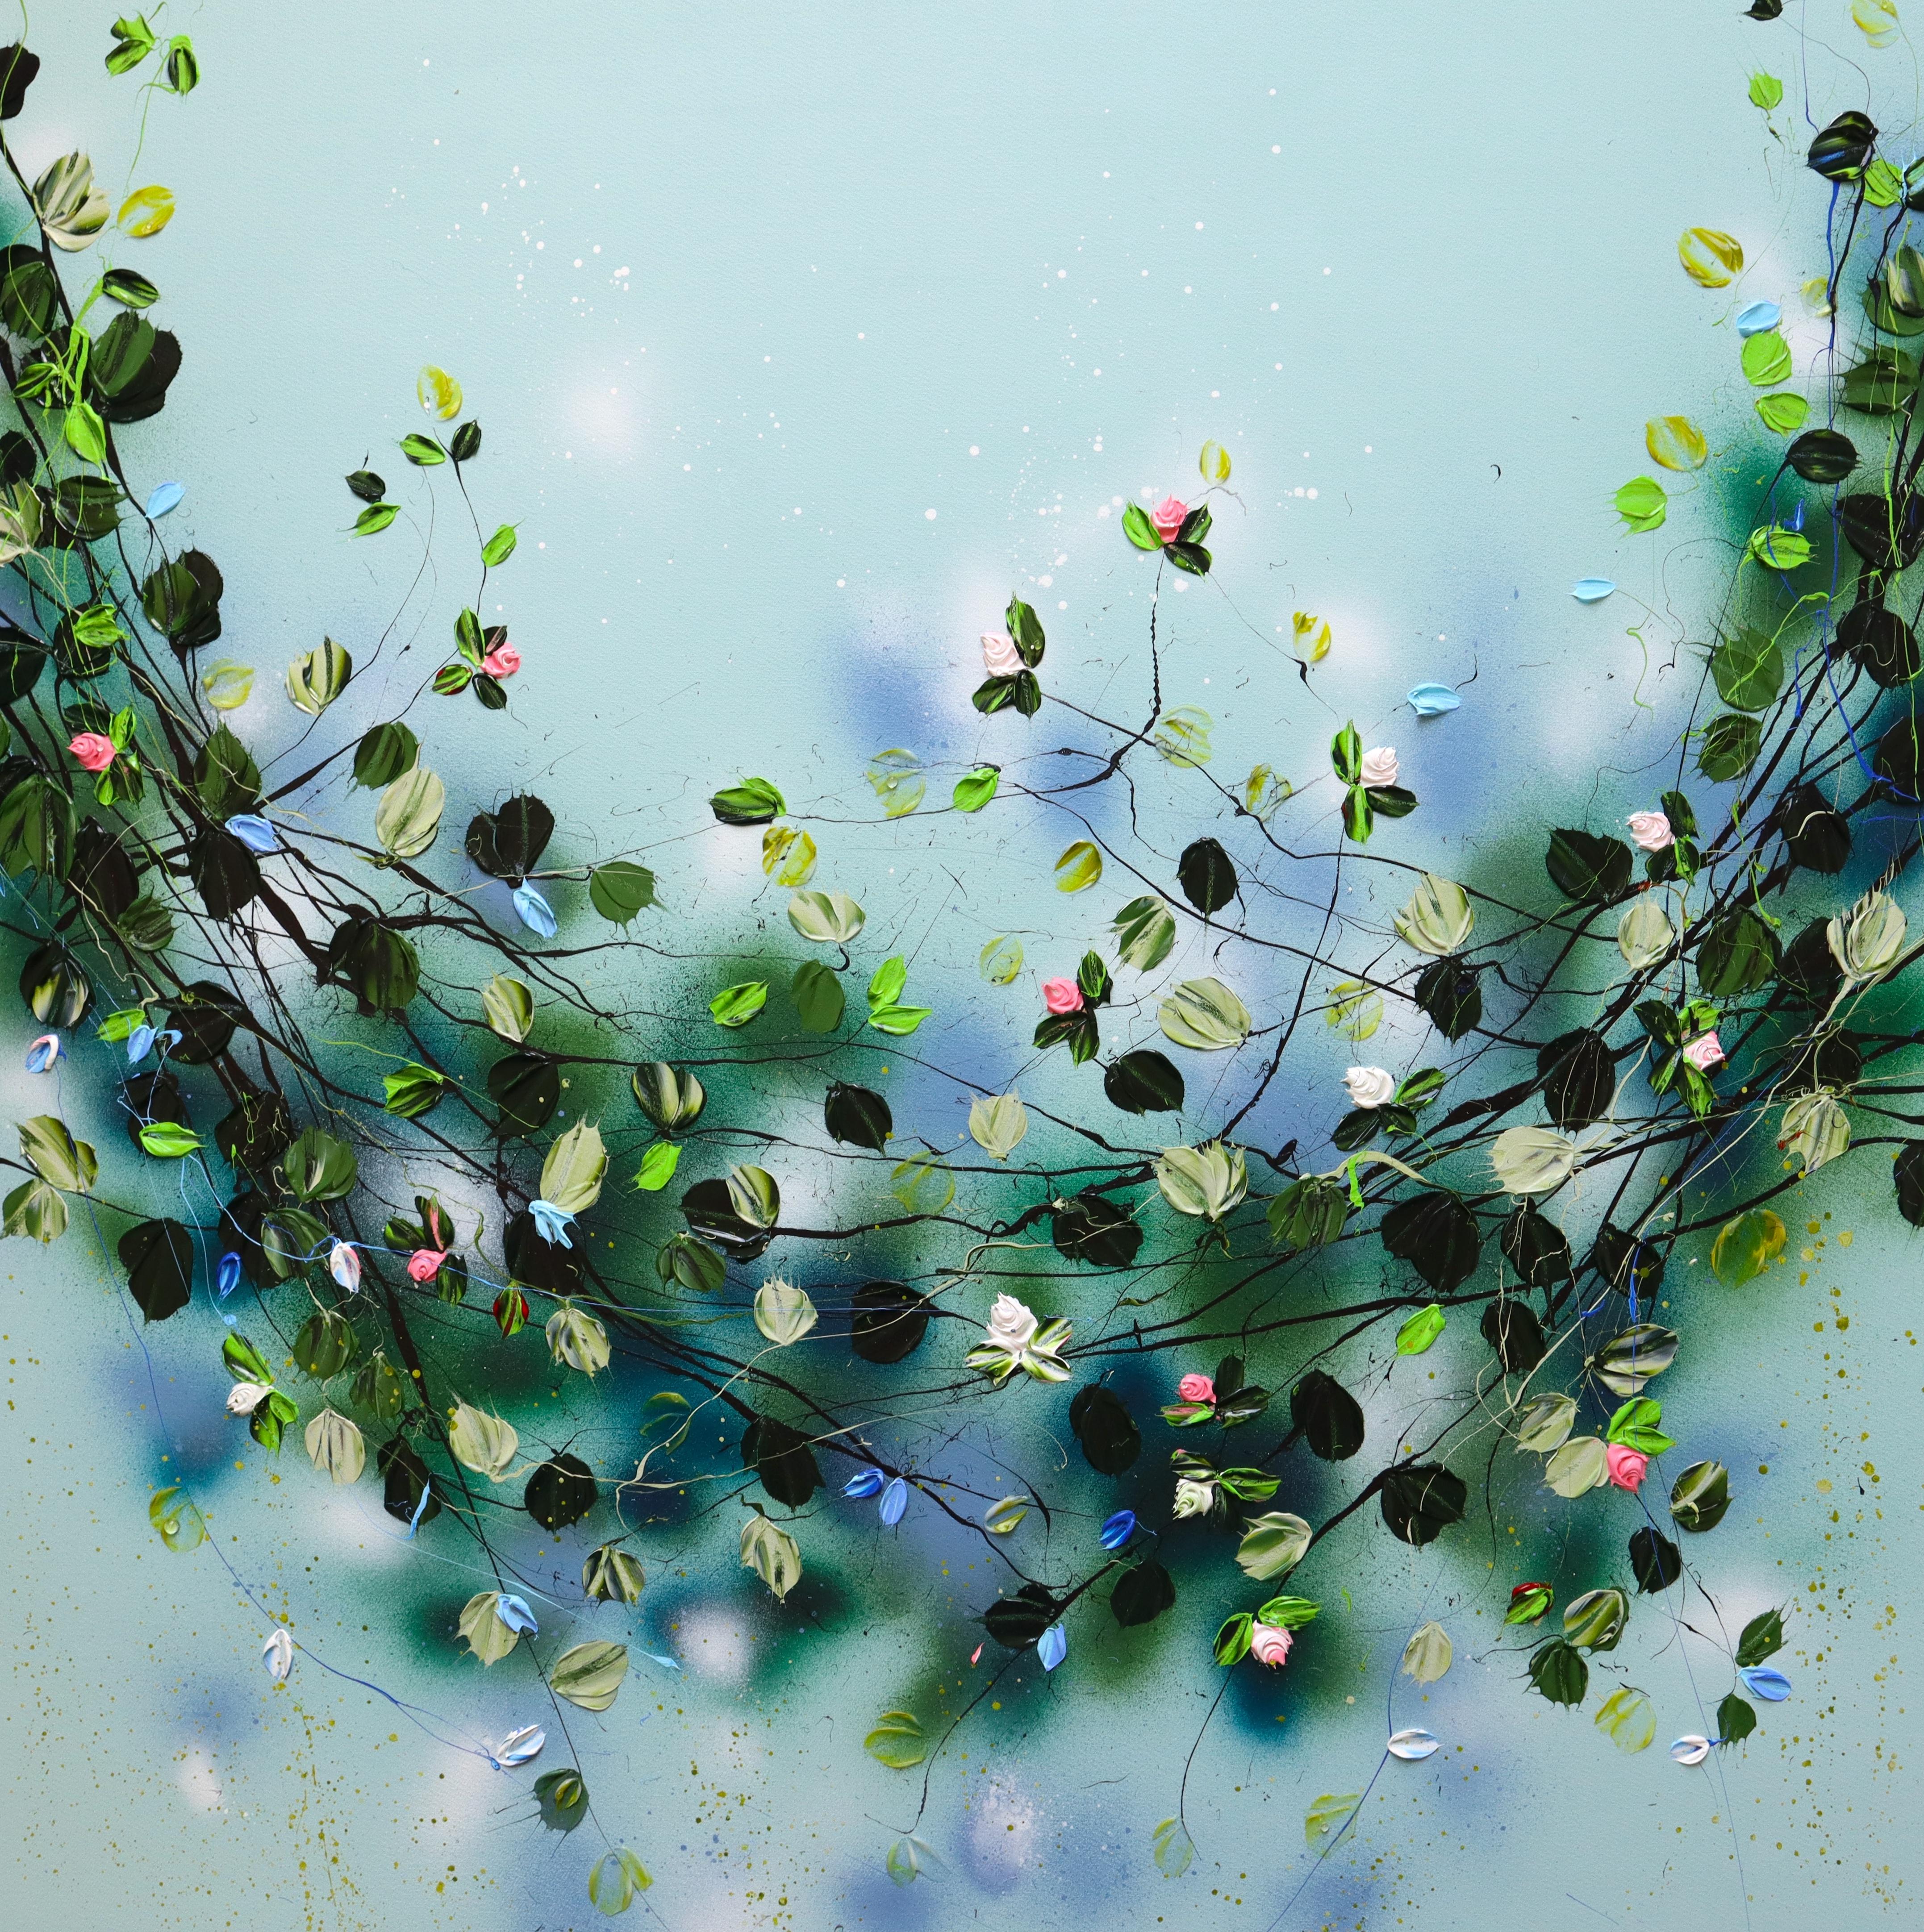 Anastassia Skopp Abstract Painting - "Flower Swing" floral large textured painting on canvas, modern impasto art